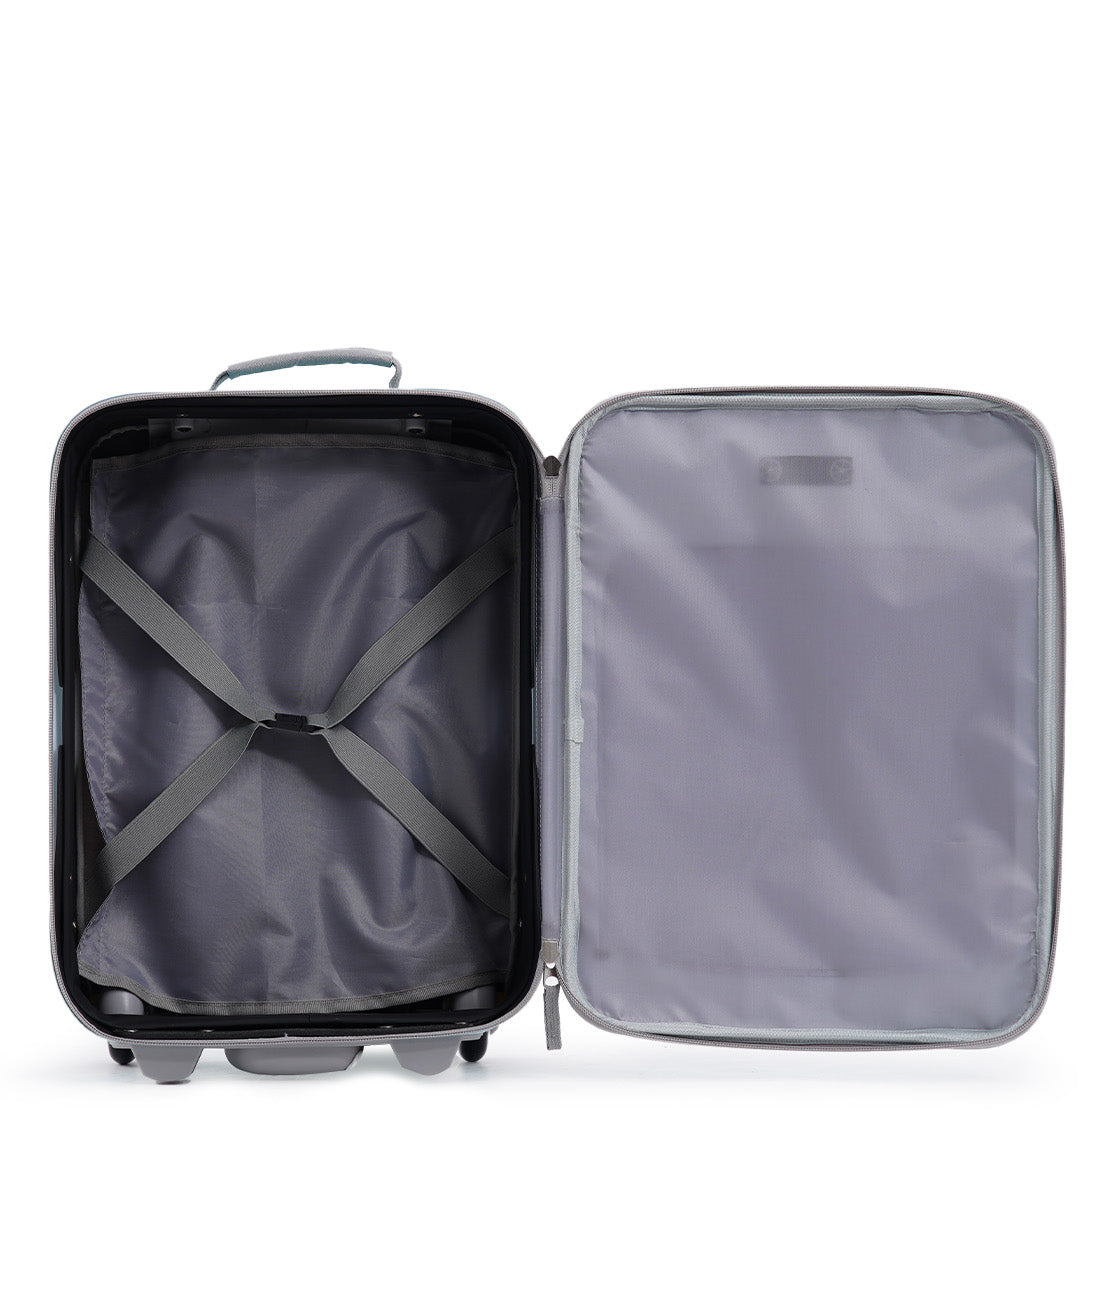 Travelers Club | 3pc Junior Travel Luggage Set